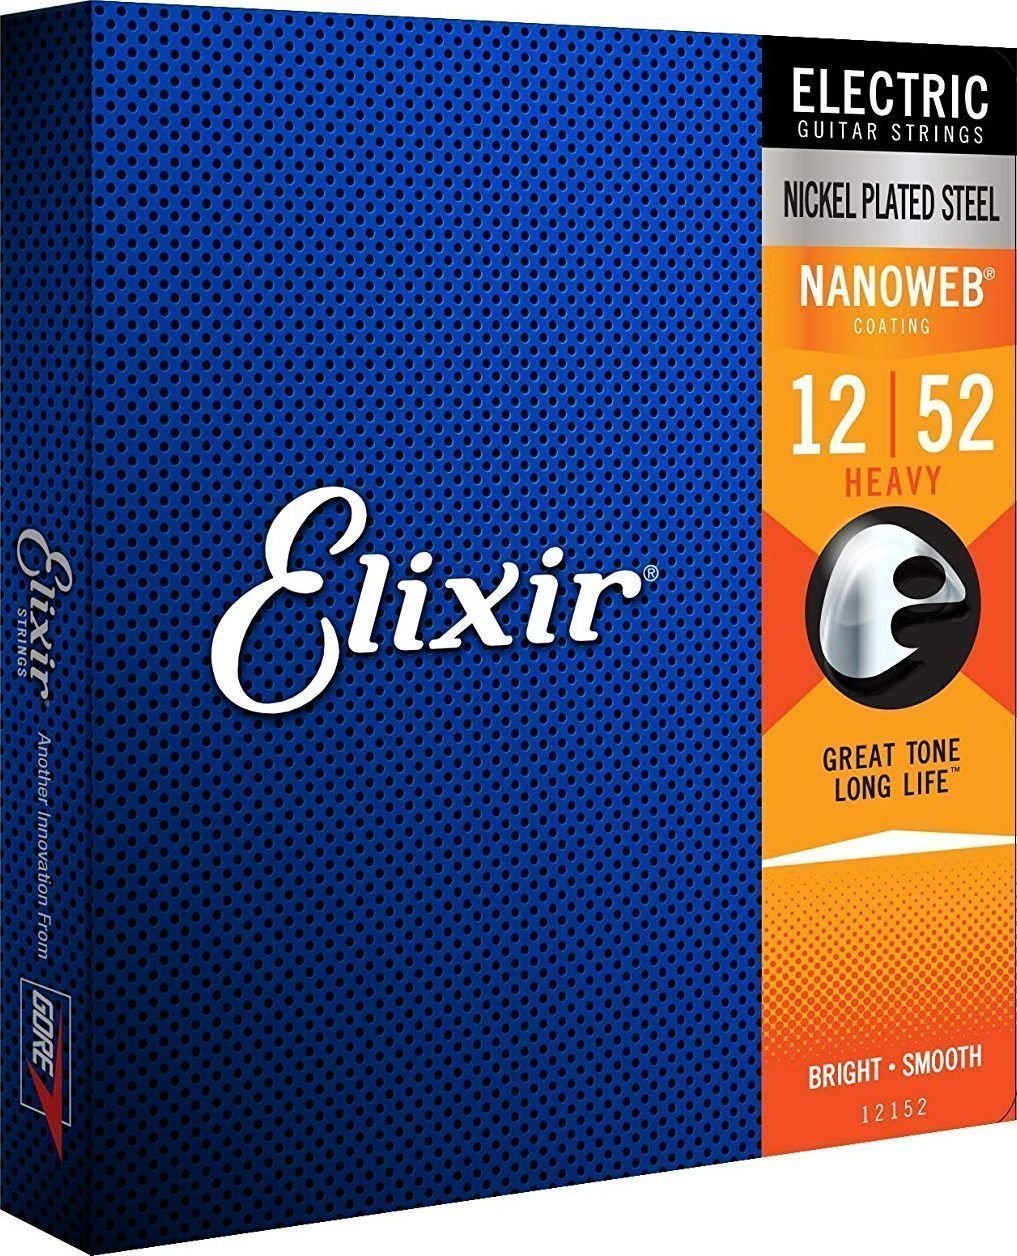 Corzi chitare electrice Elixir 12152 Nanoweb 12-52